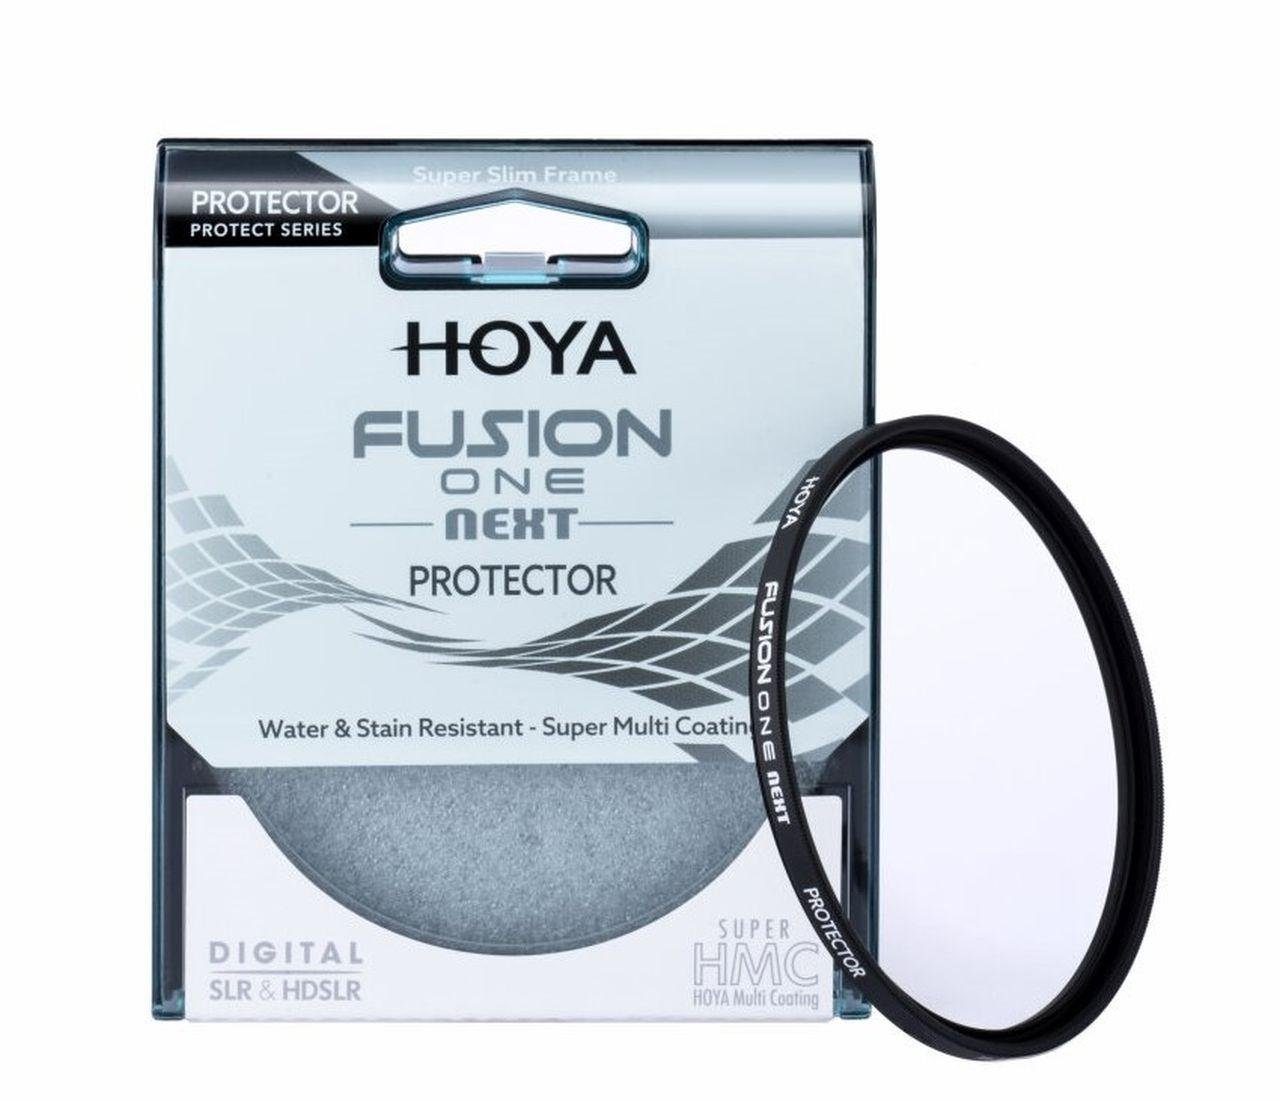 Hoya Fusion ONE Next Objektivzubehör Protector 49mm